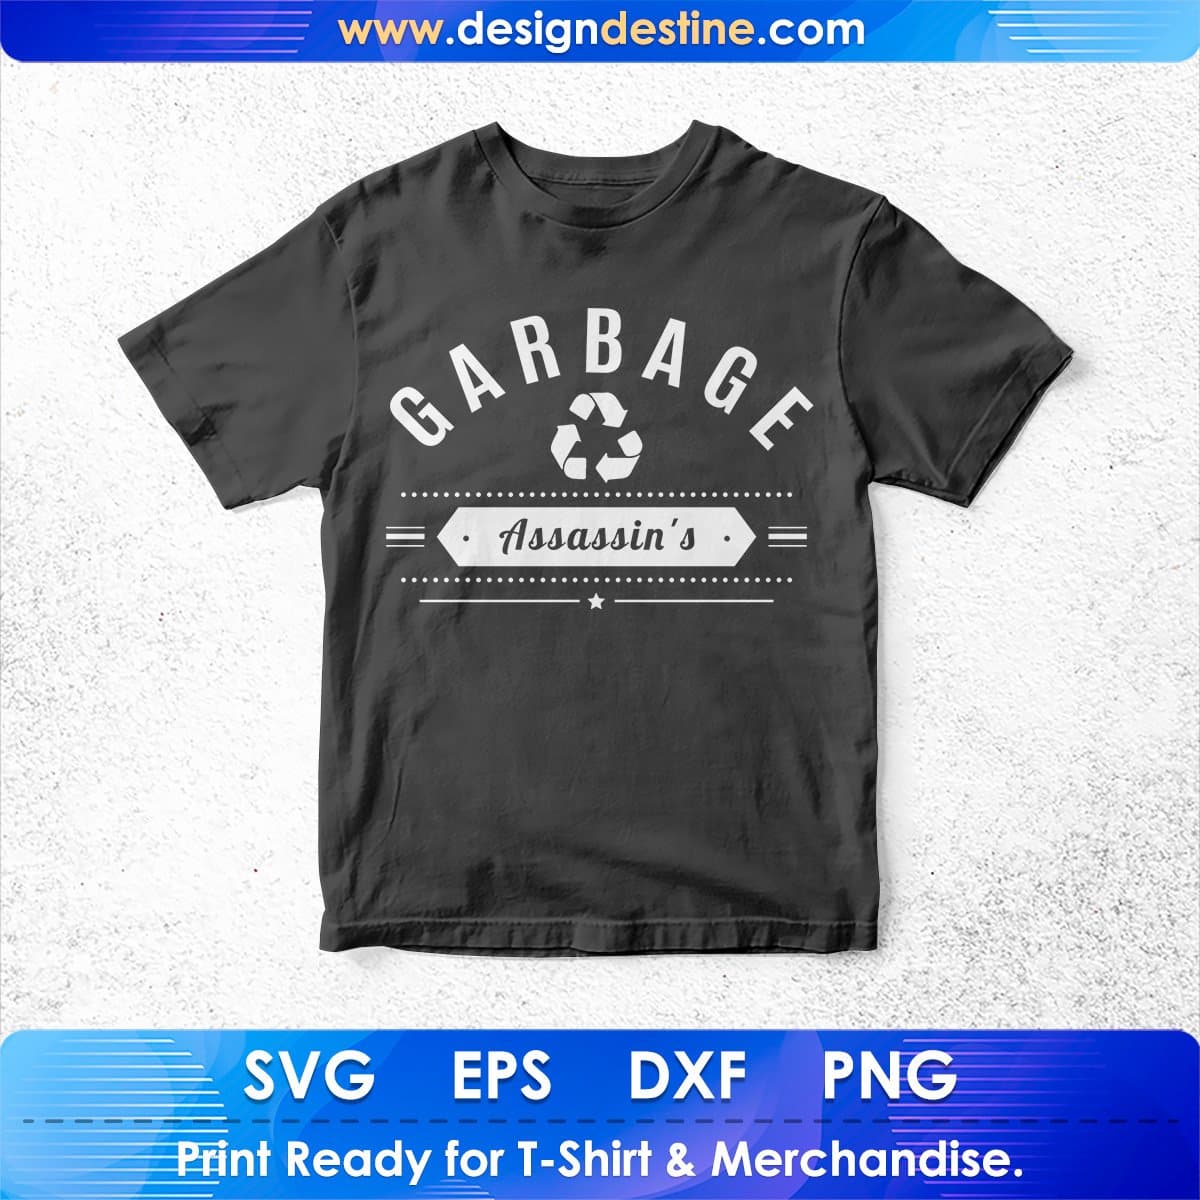 Garbage Assasinate's T shirt Design In Svg Cutting Printable Files